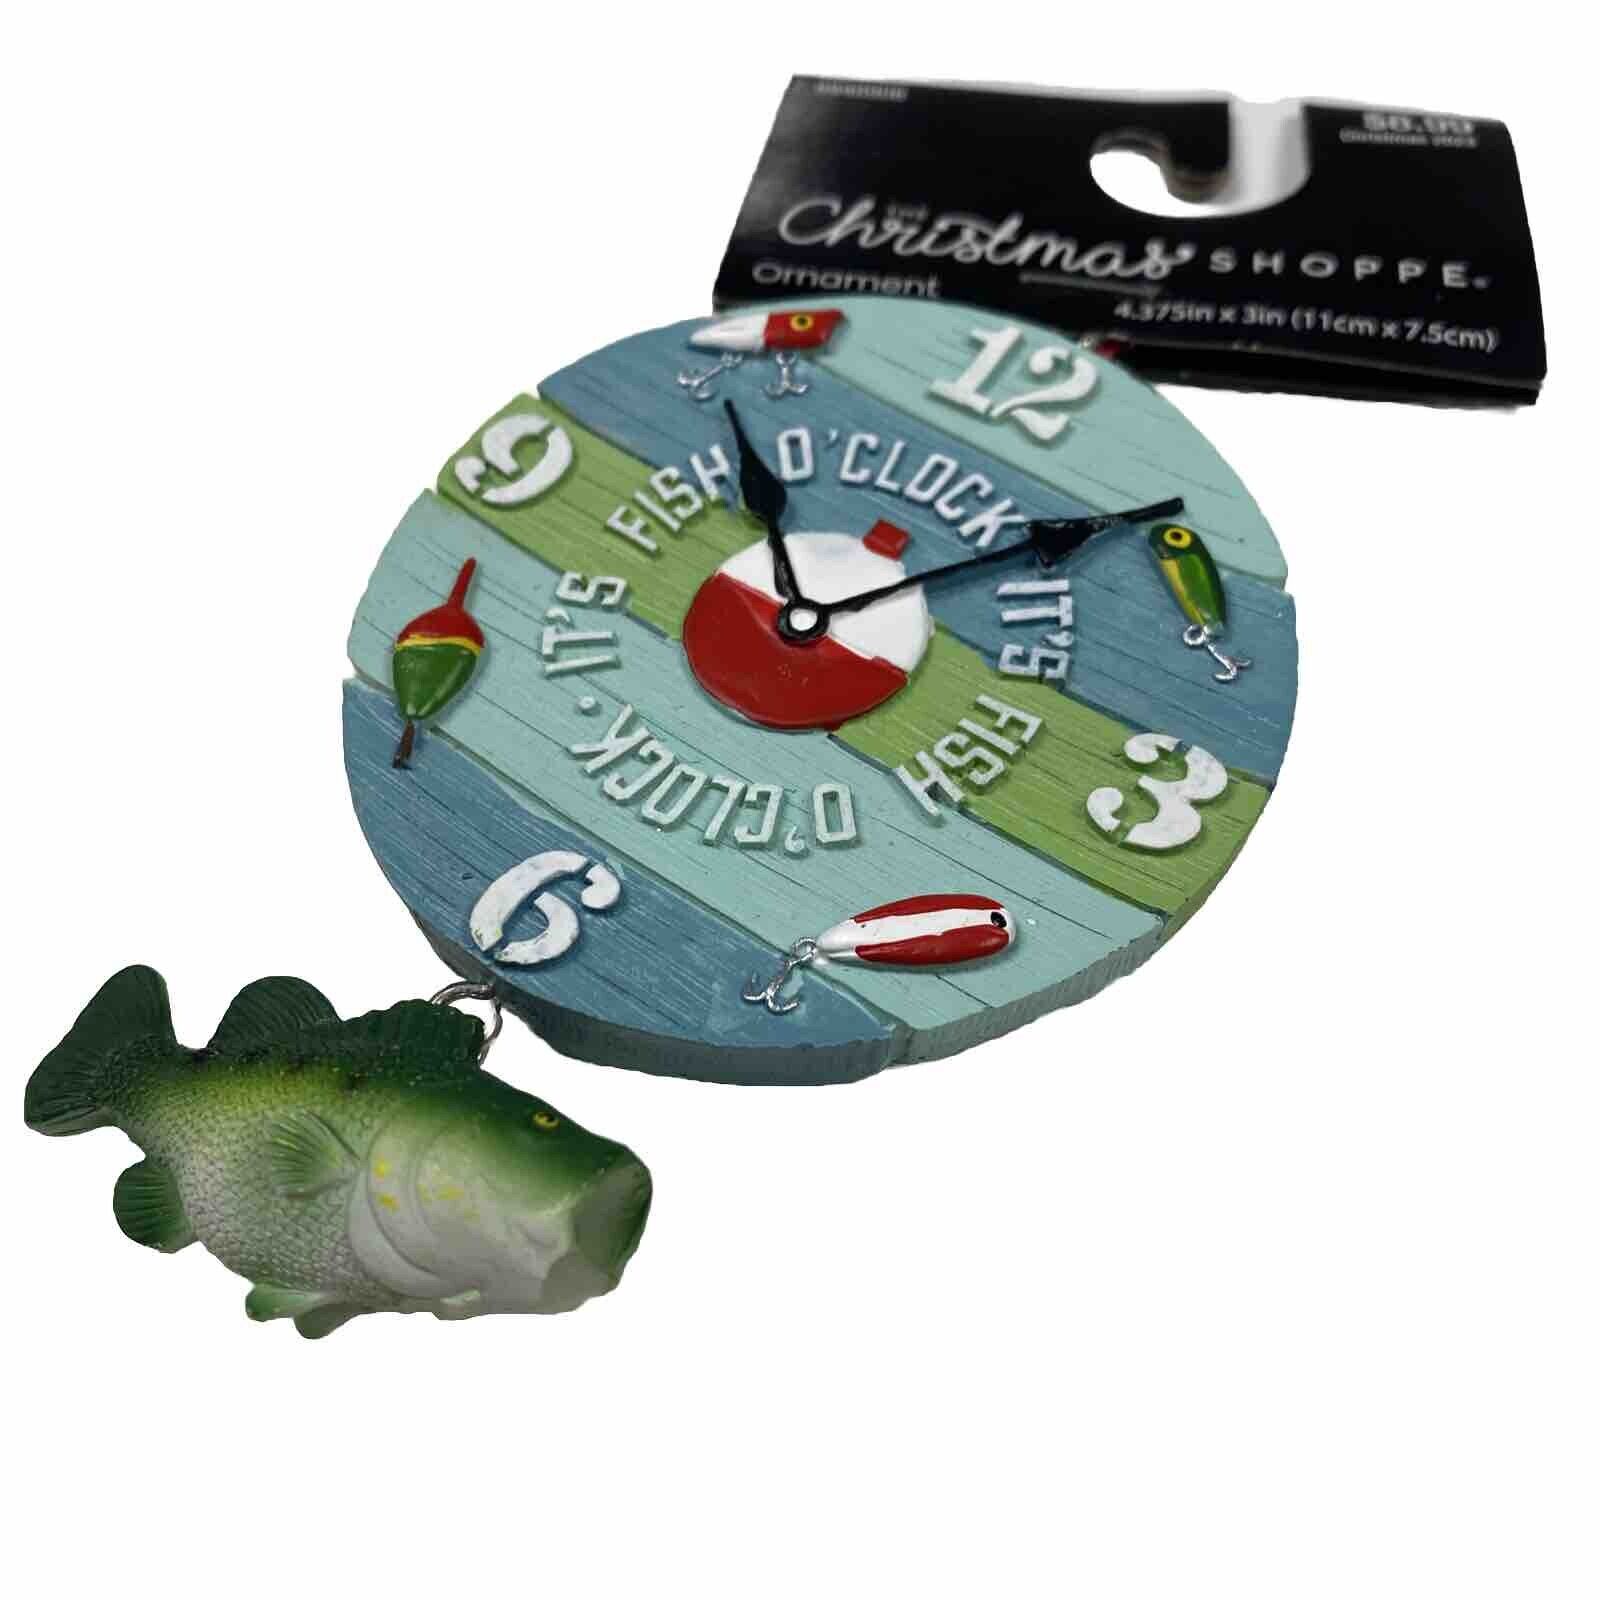 Its Fish O'clock Christmas Ornament By The Christmas Shoppe - Fishing Sport NWT